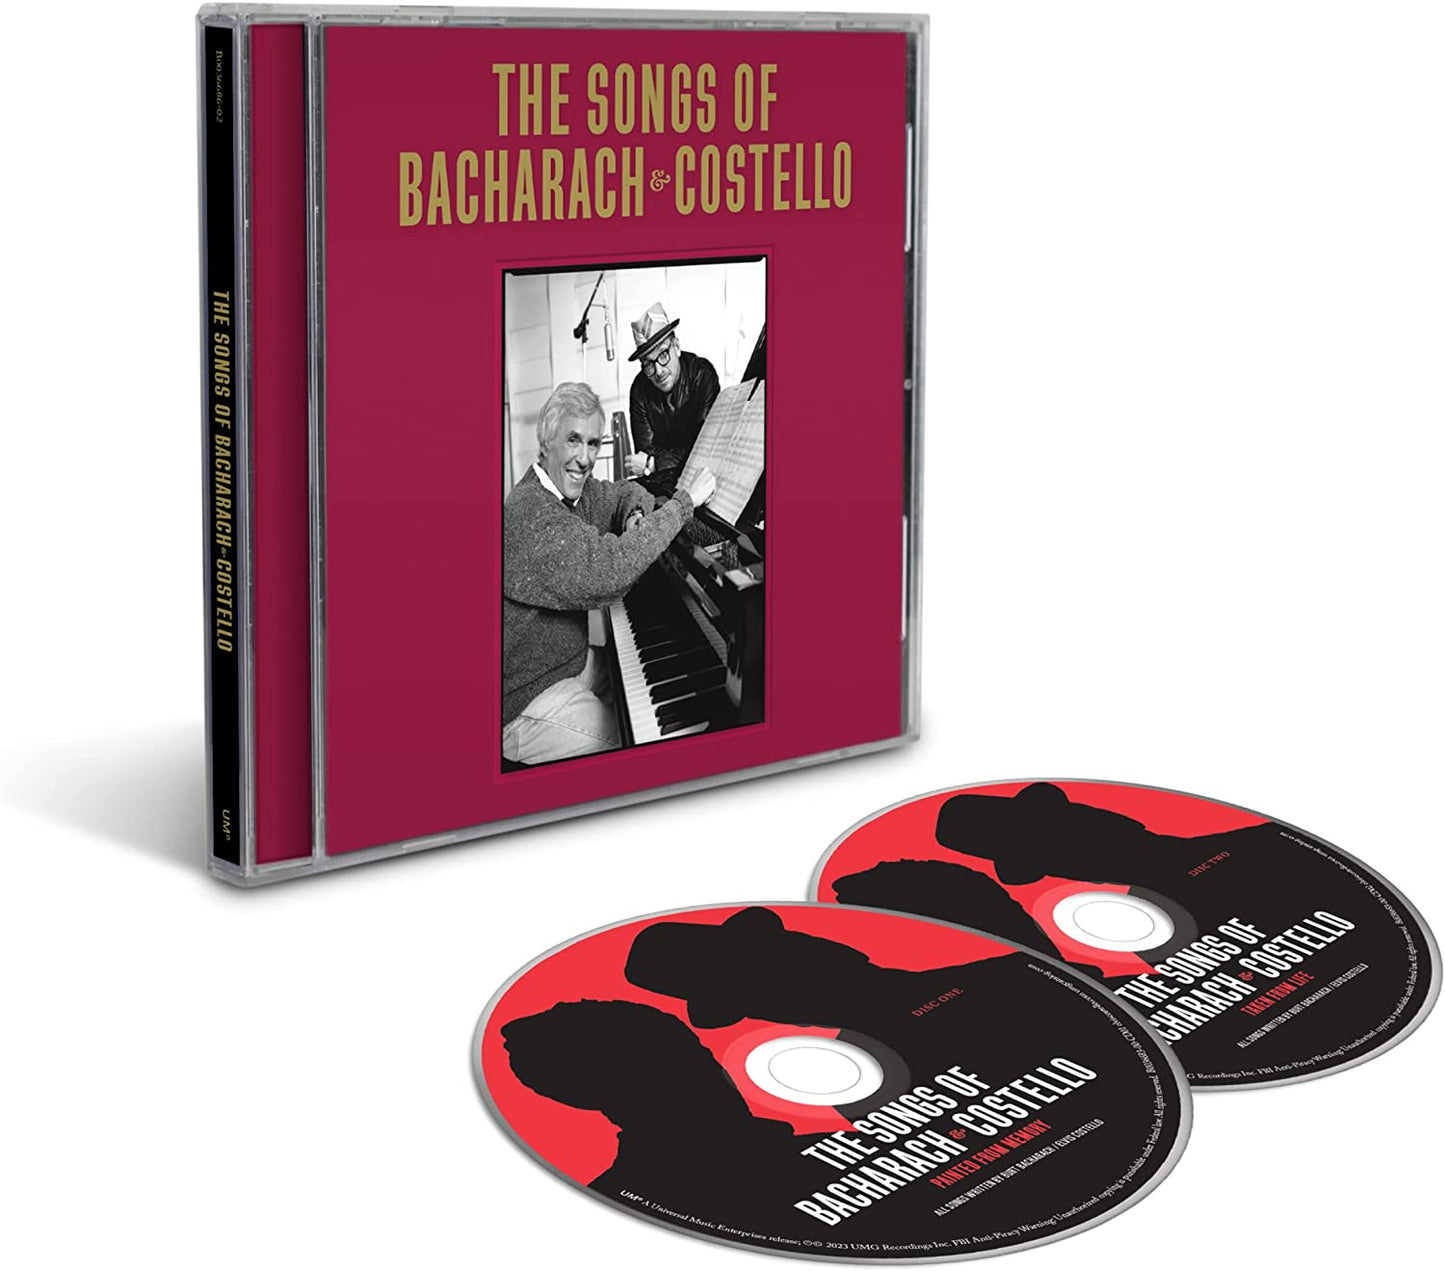 Elvis Costello & Burt Bacharach - The Songs Of - 2CD